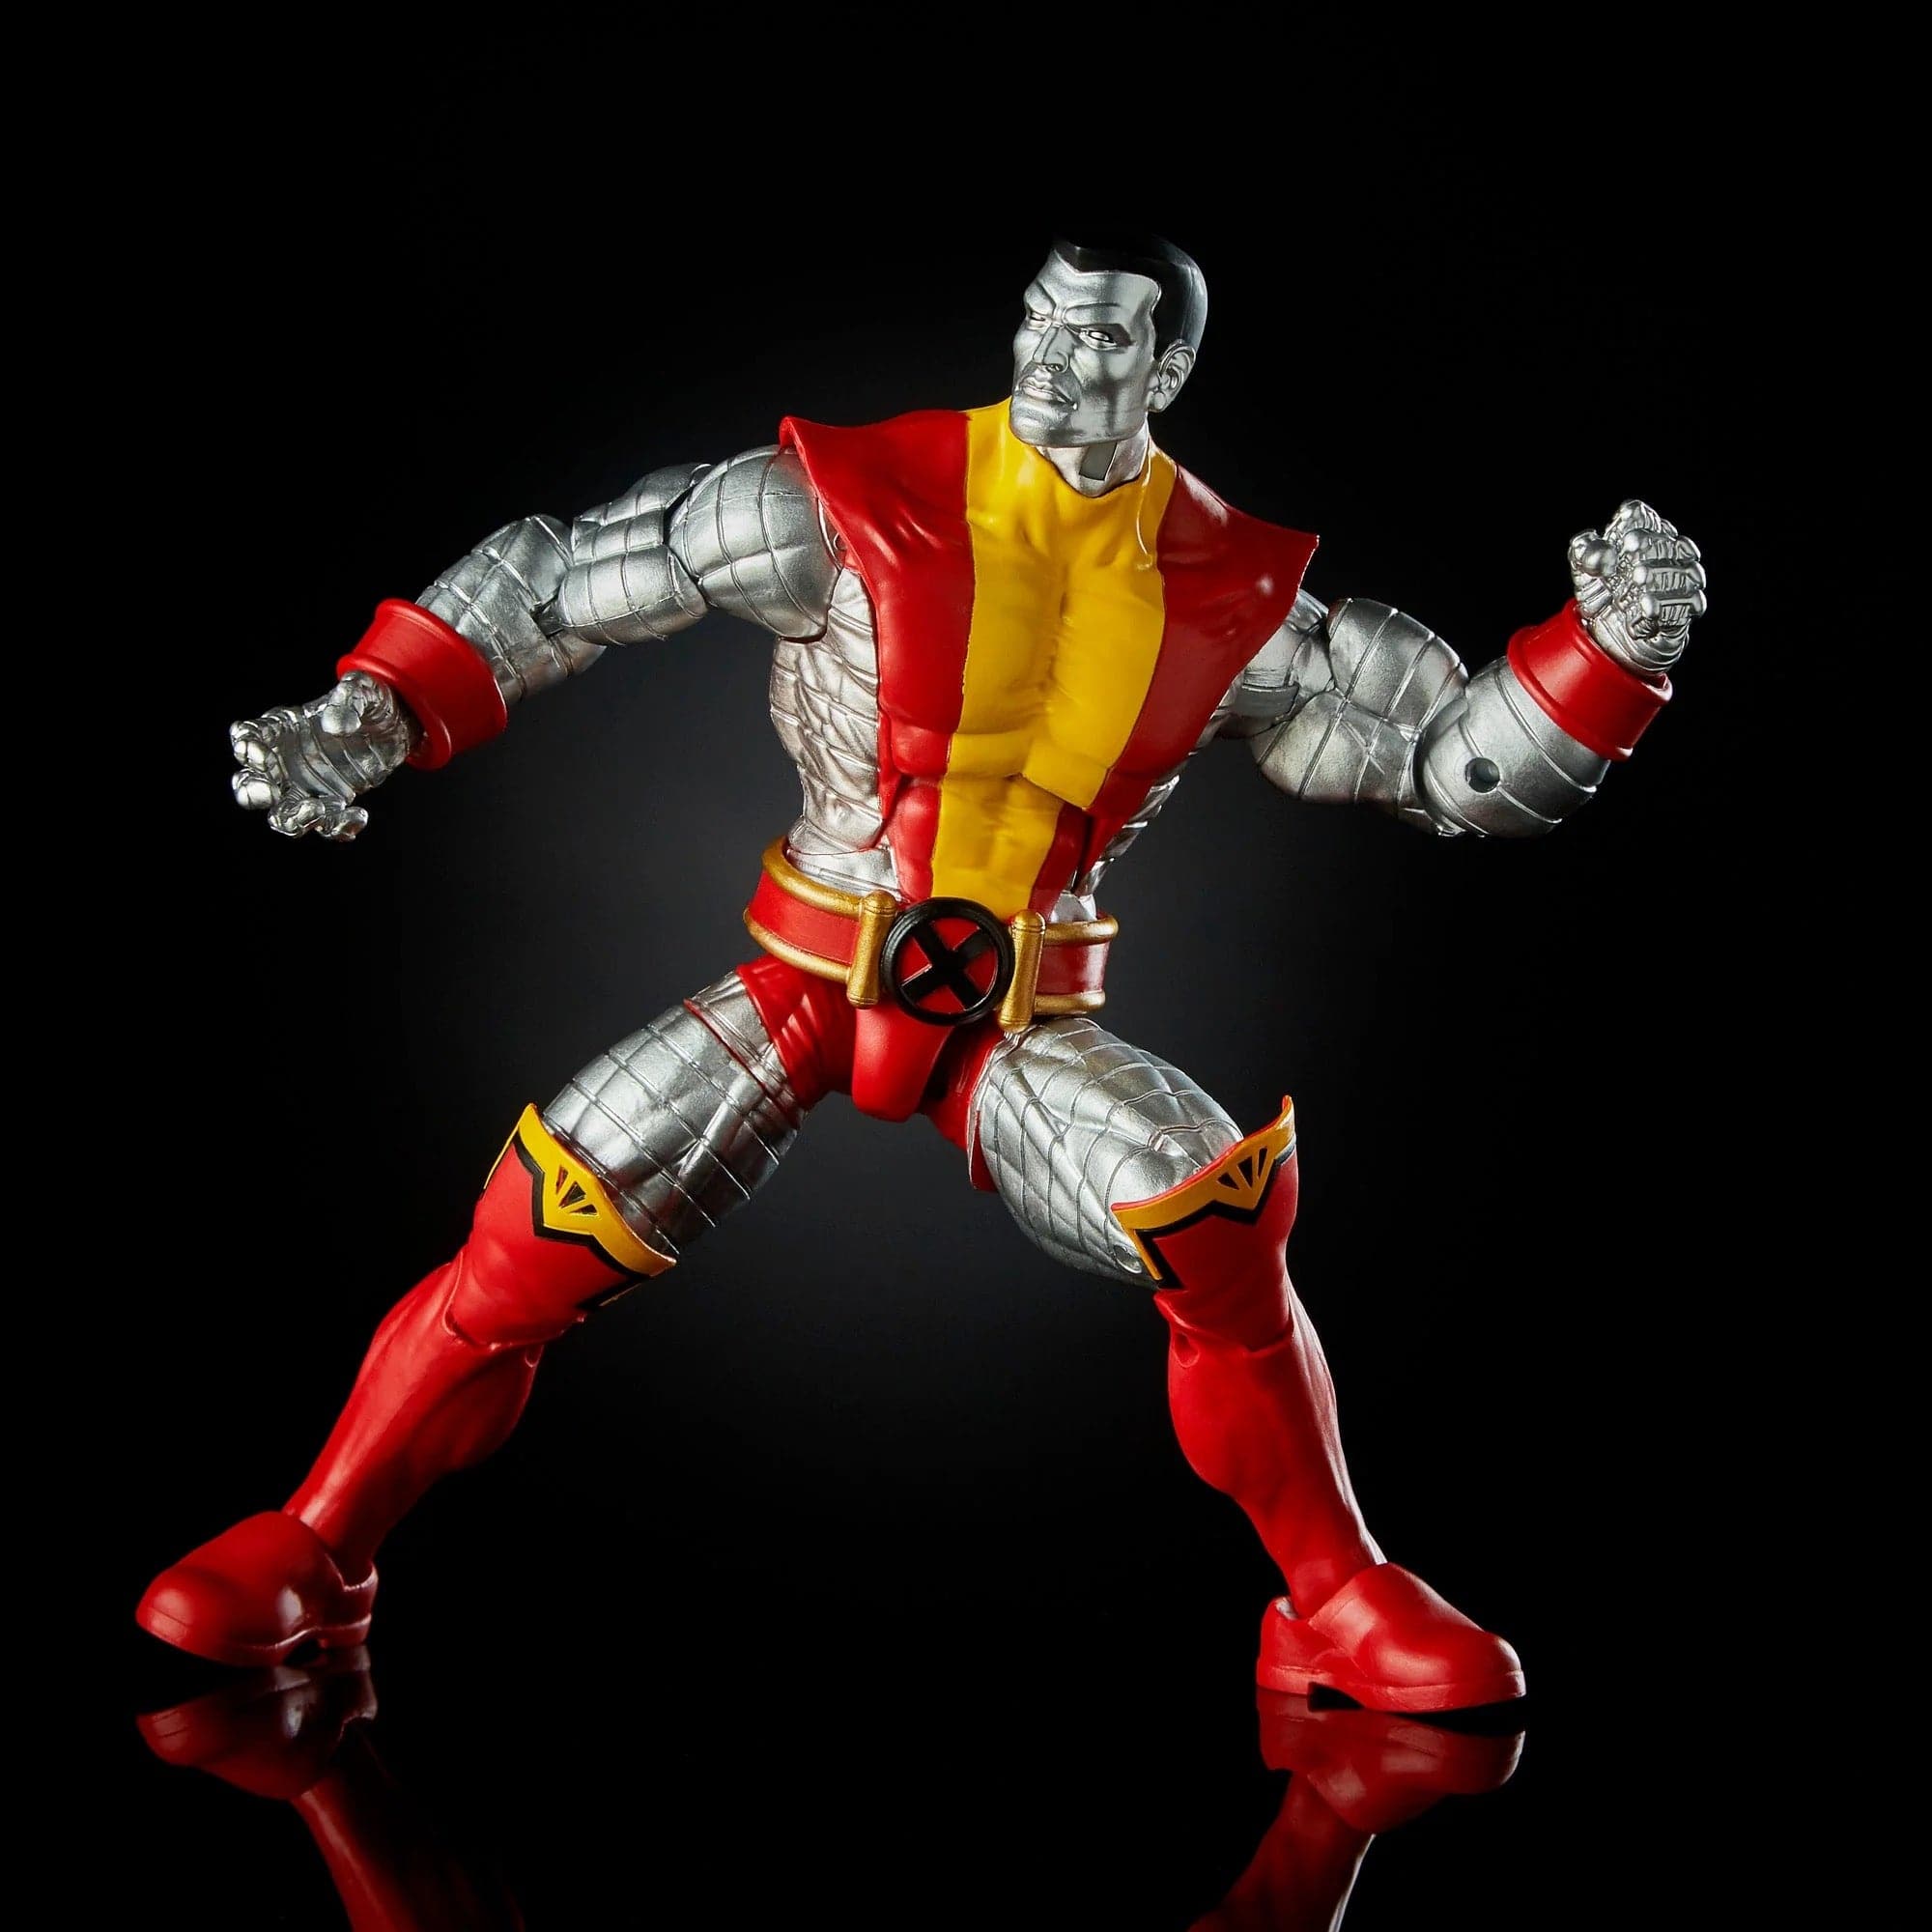 Hasbro Marvel Legends Series 80th Anniversary Colossus vs. Juggernaut Action Figure Two-Pack